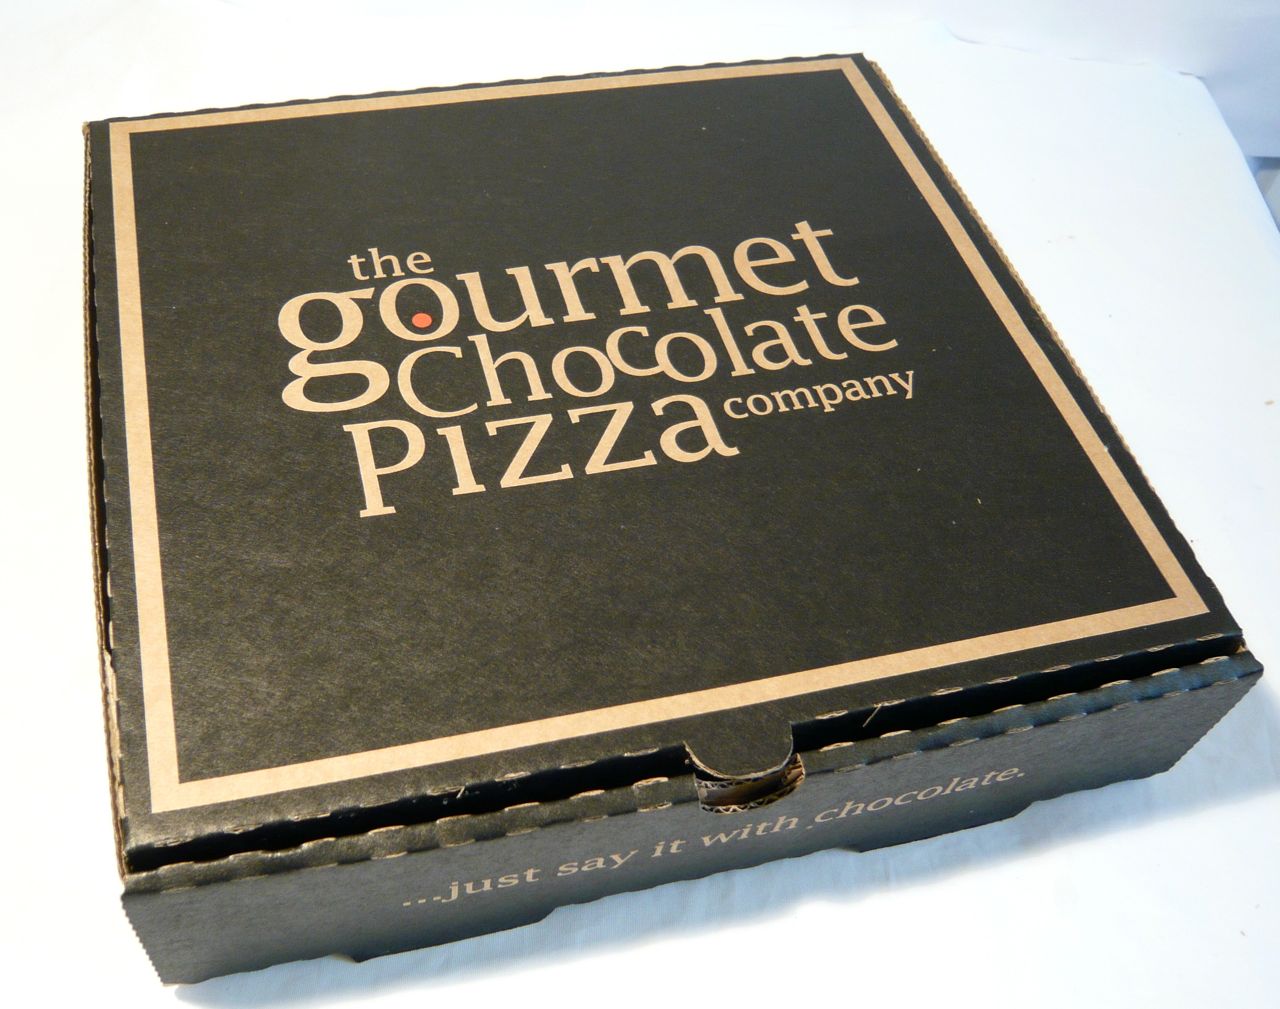 https://www.chocablog.com/wp-content/uploads/2010/03/chocolate-pizza-1.jpg